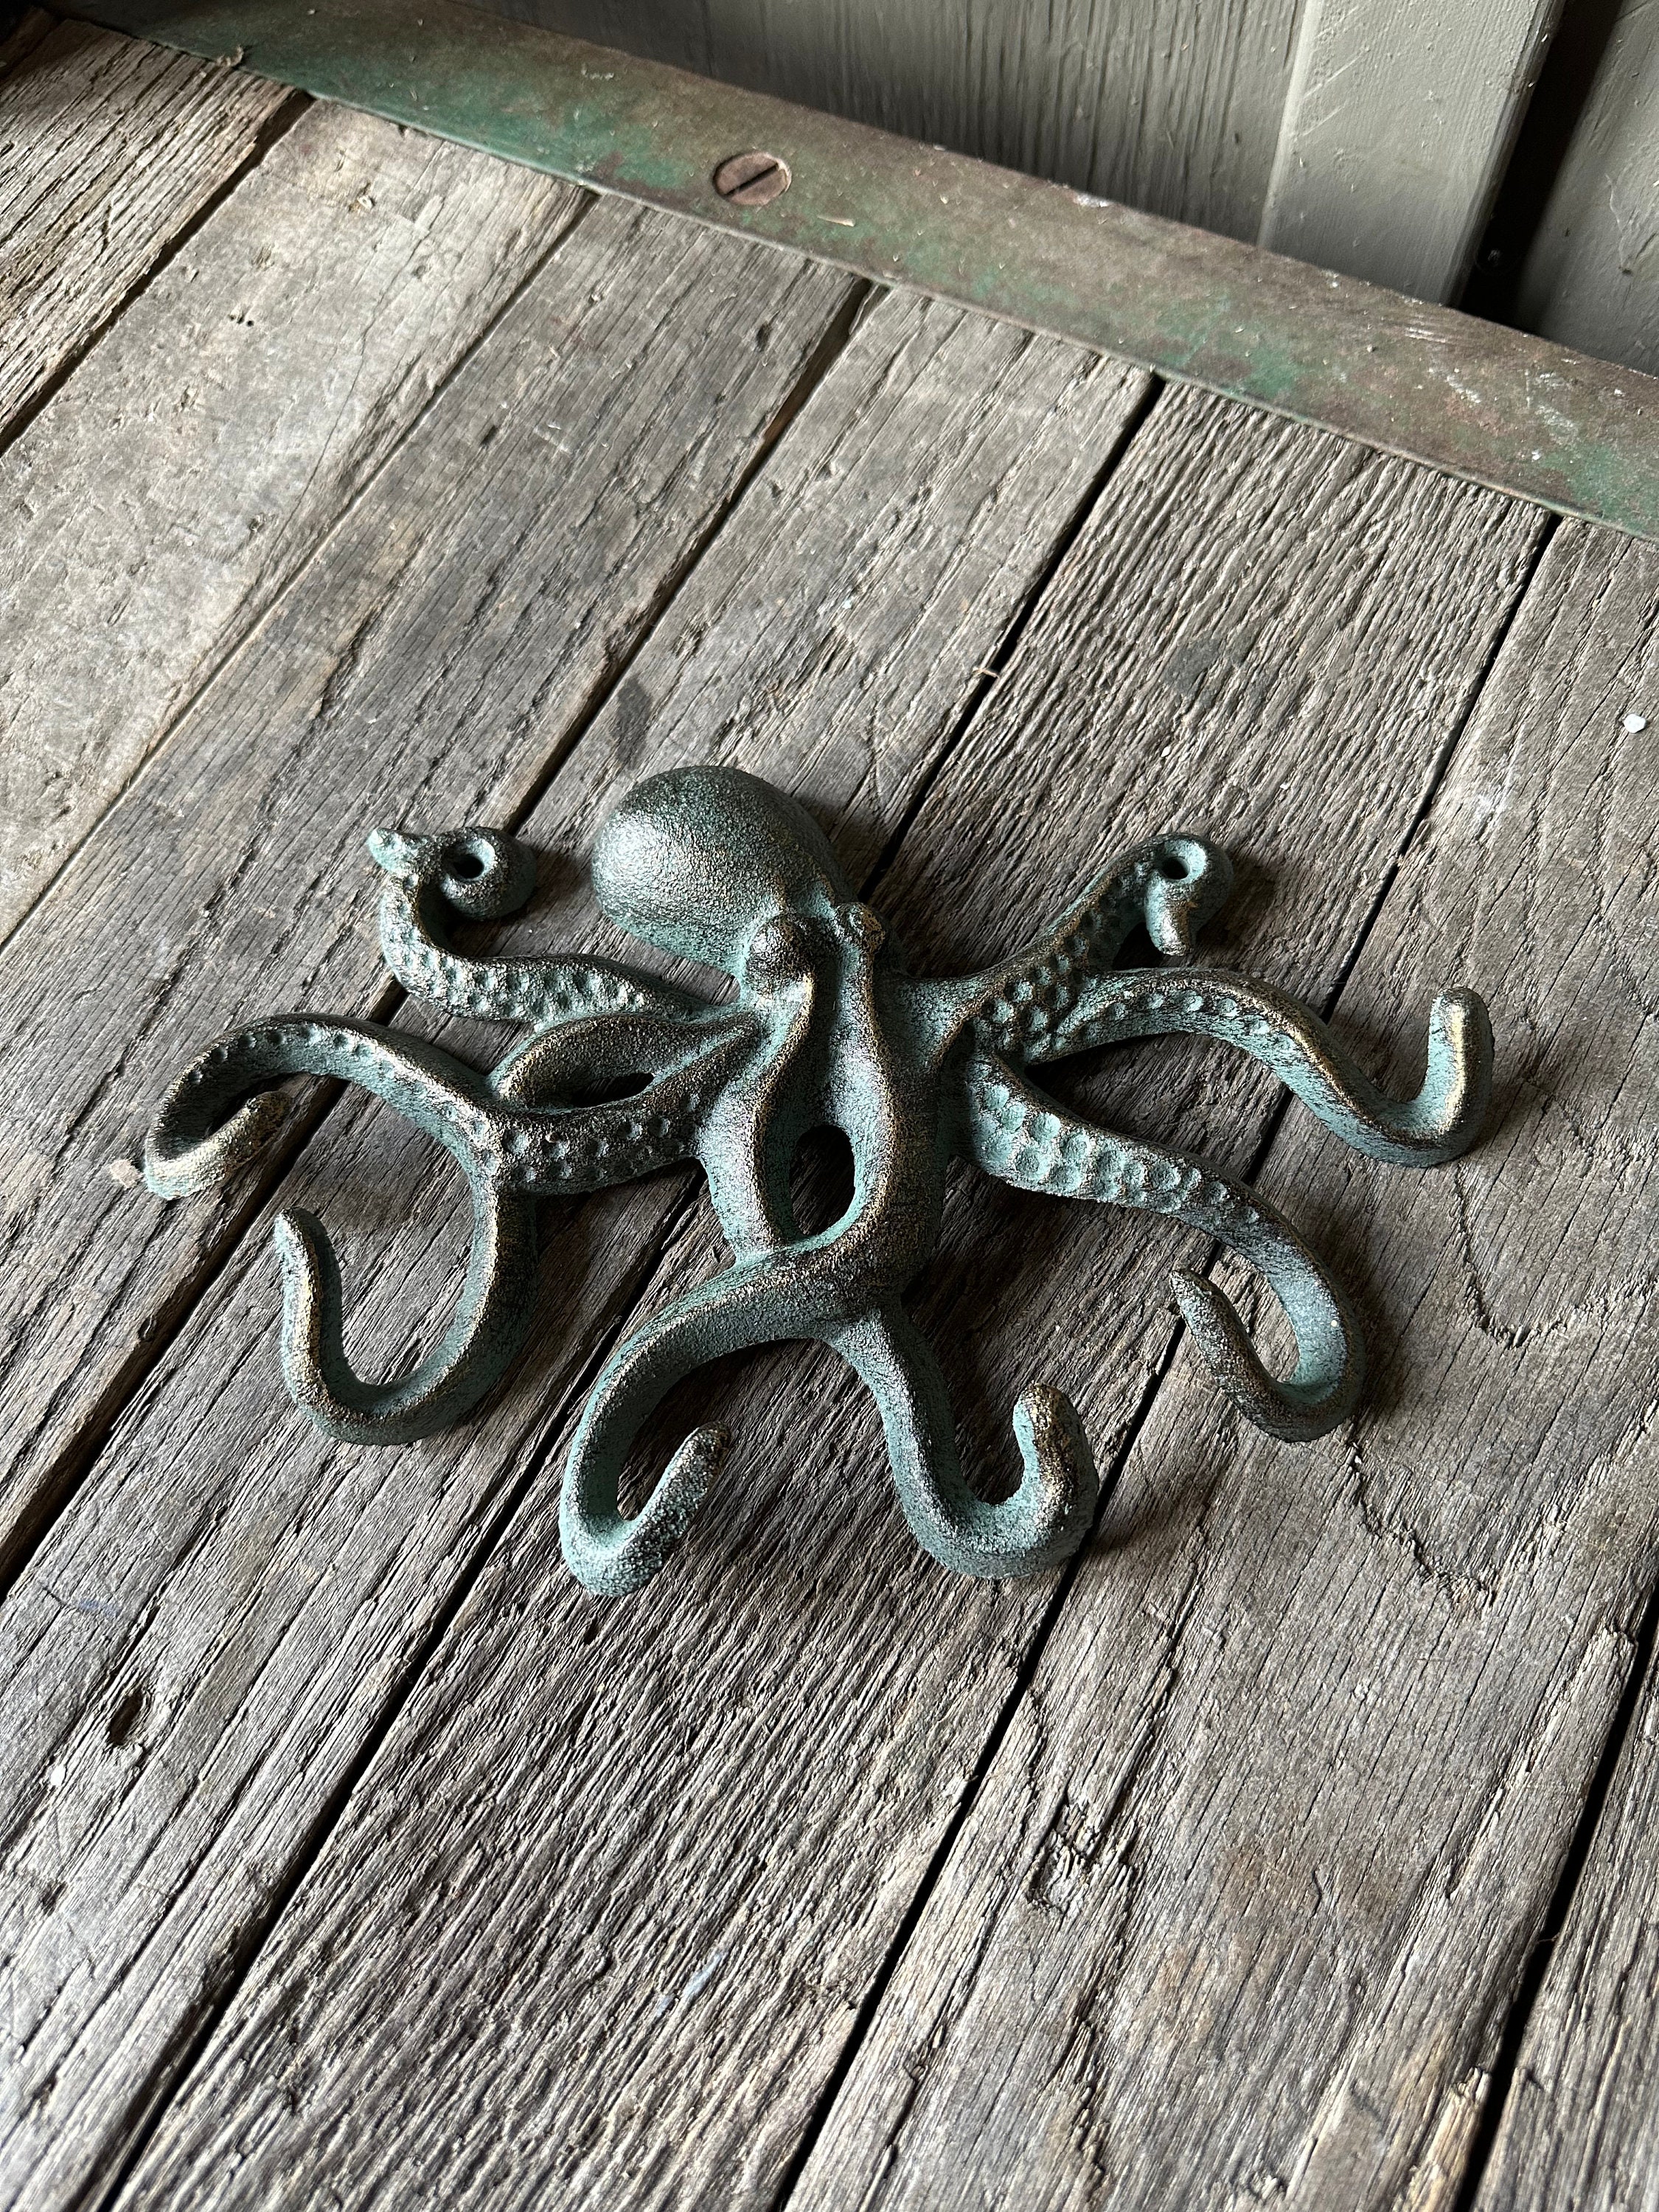 Octopus Wall Hanger 